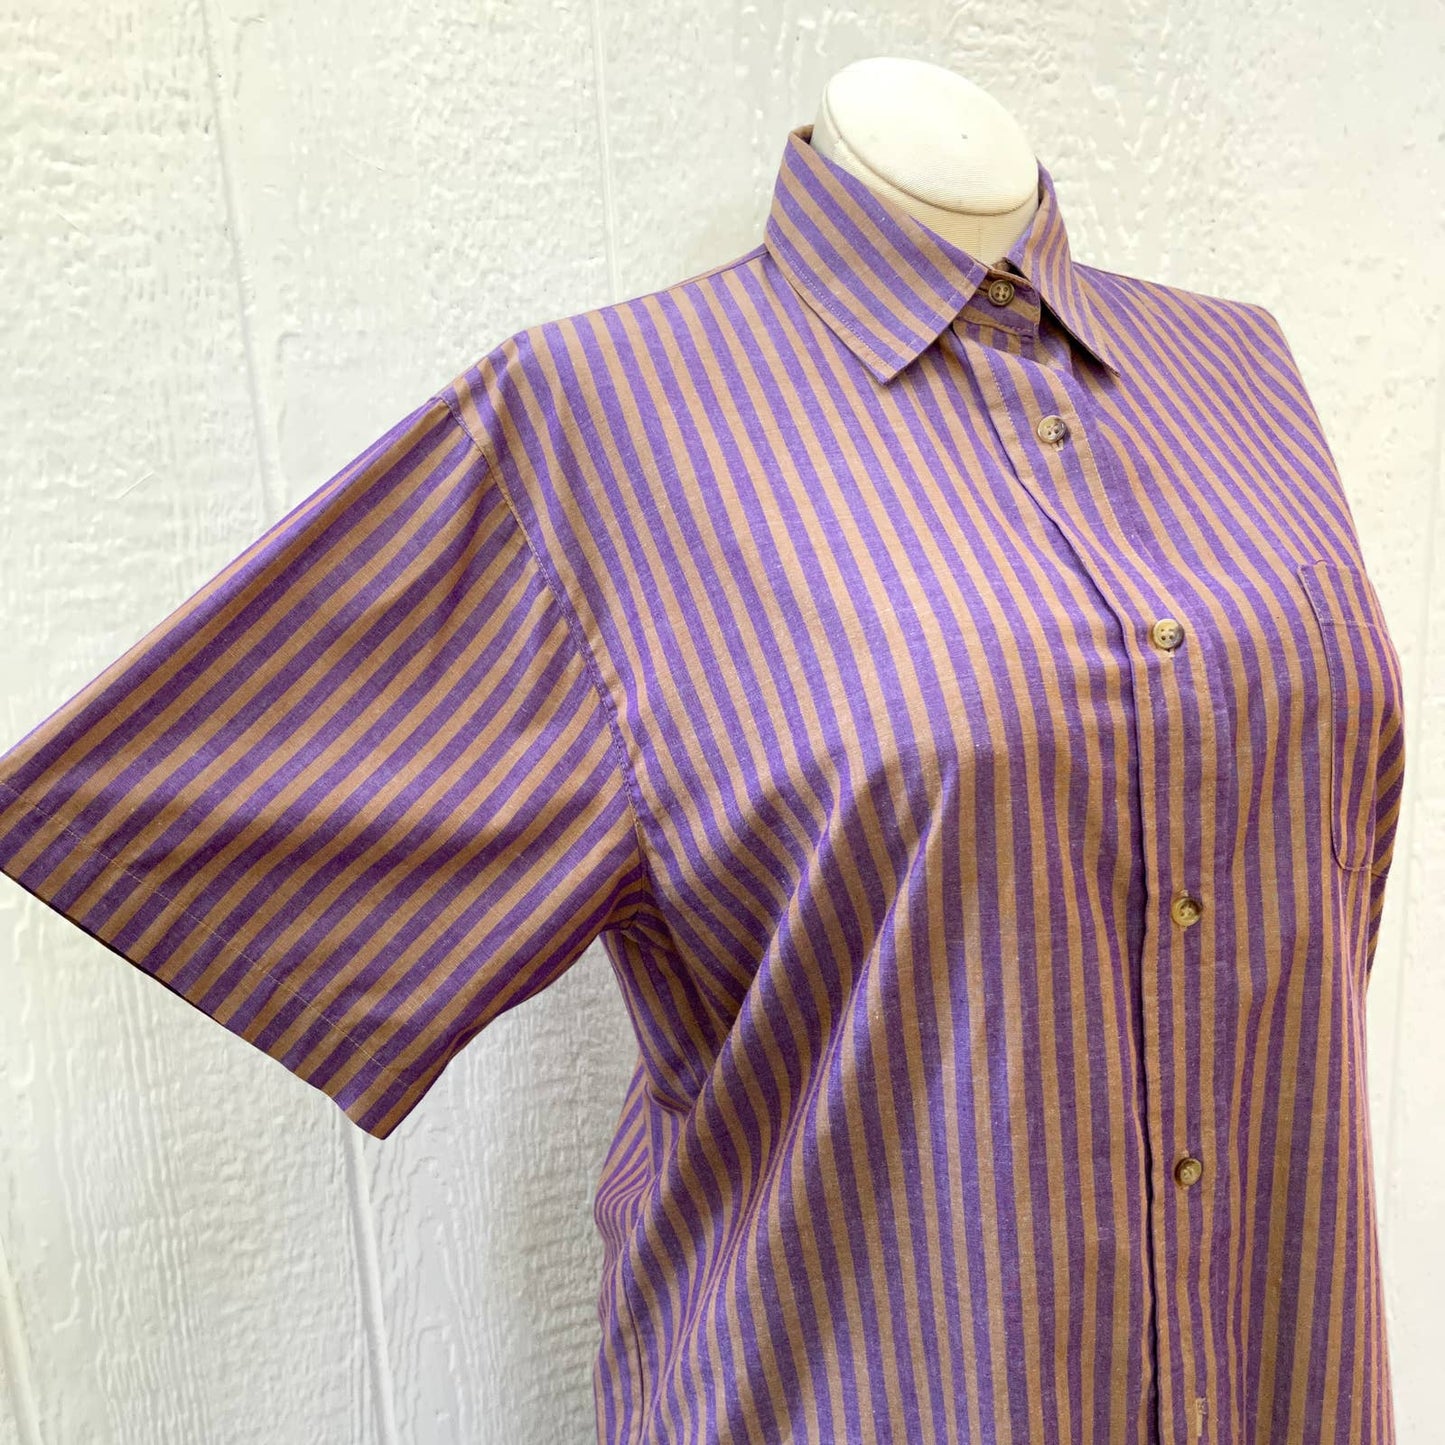 Vintage 90s Striped Polished Cotton Set Short Sleeve Top Skirt Perry Ellis M